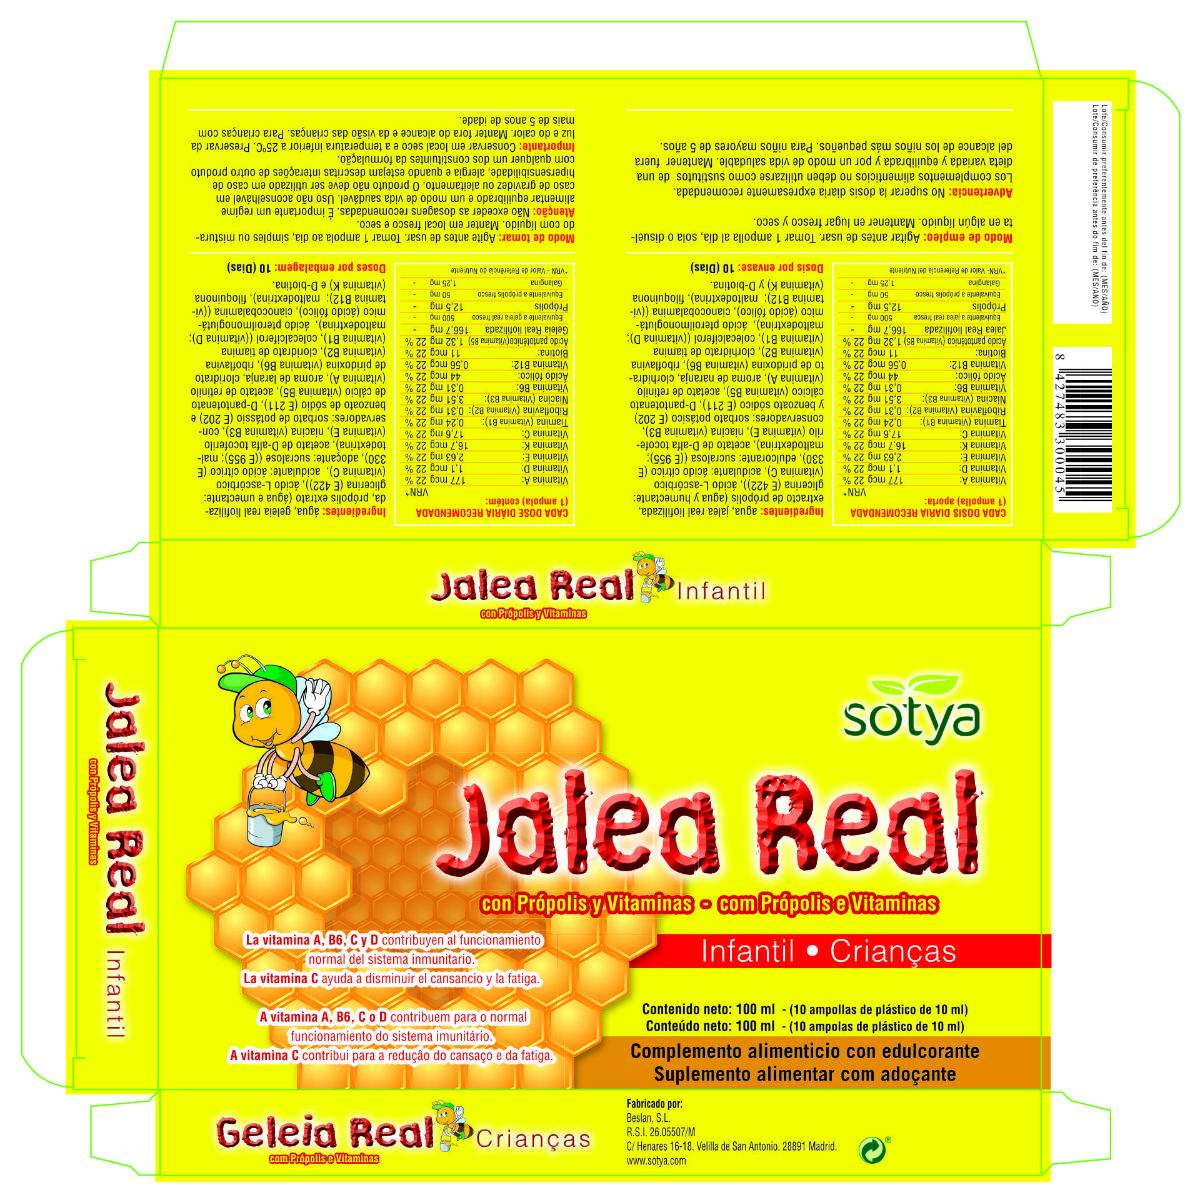 Jalea Real Infantil 20 Ampollas | Sotya - Dietetica Ferrer